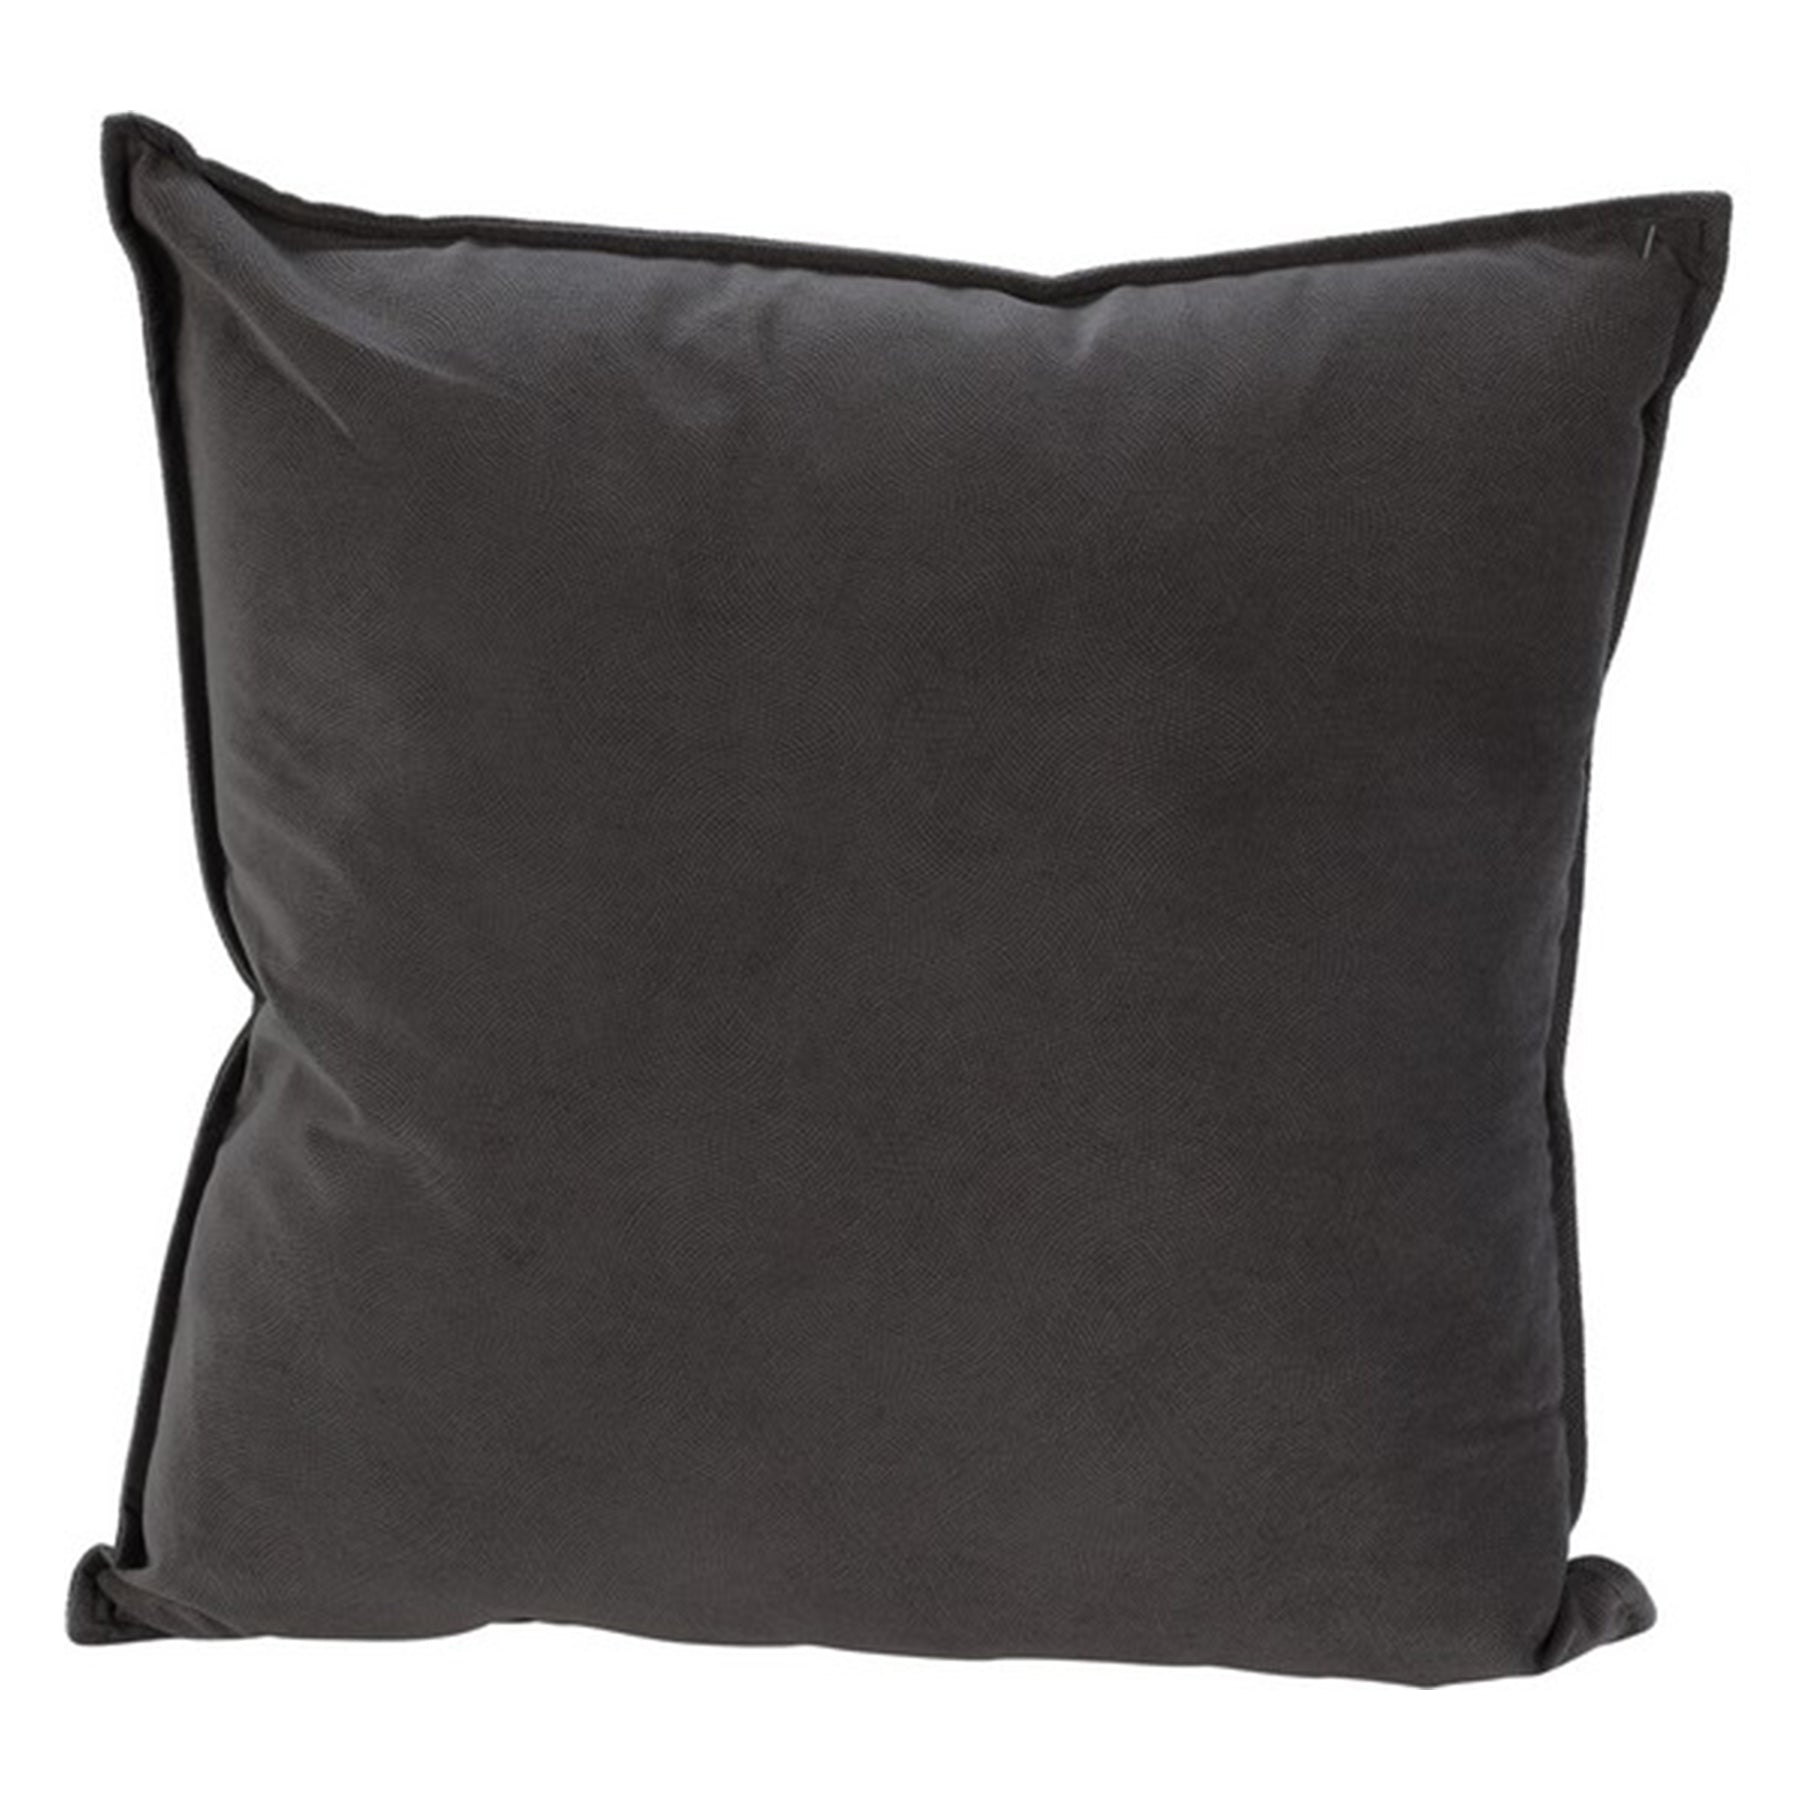 Decorative pillow - ESSENTIALS gray